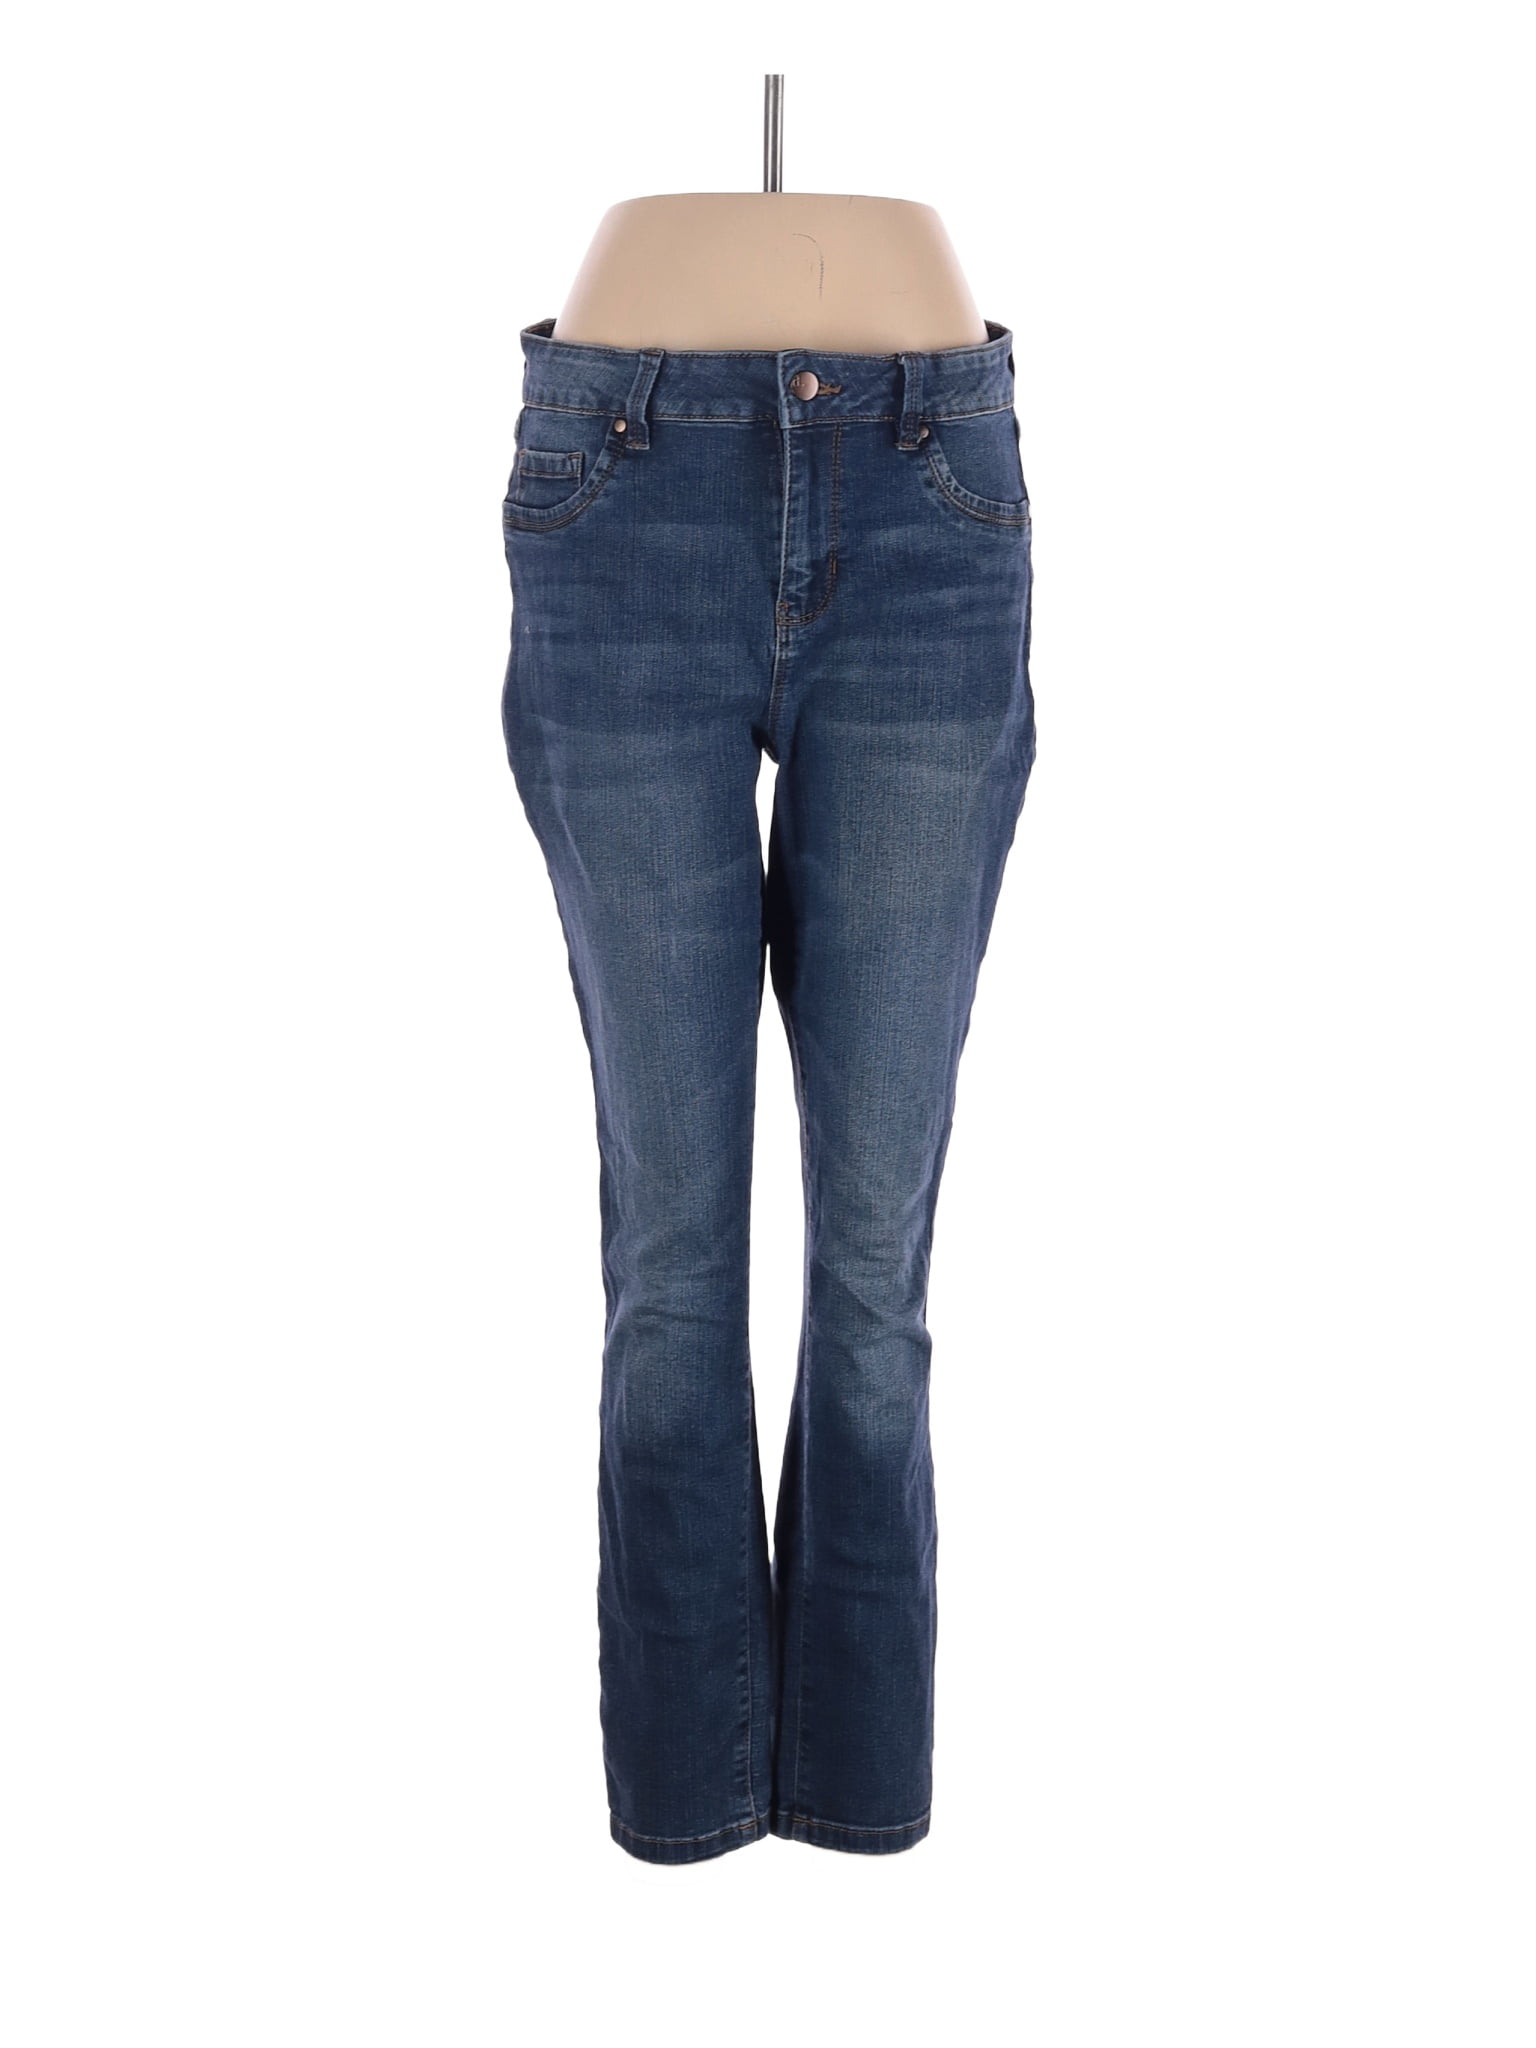 Pre-Owned D. jeans Women's Size 10 Jeans - Walmart.com